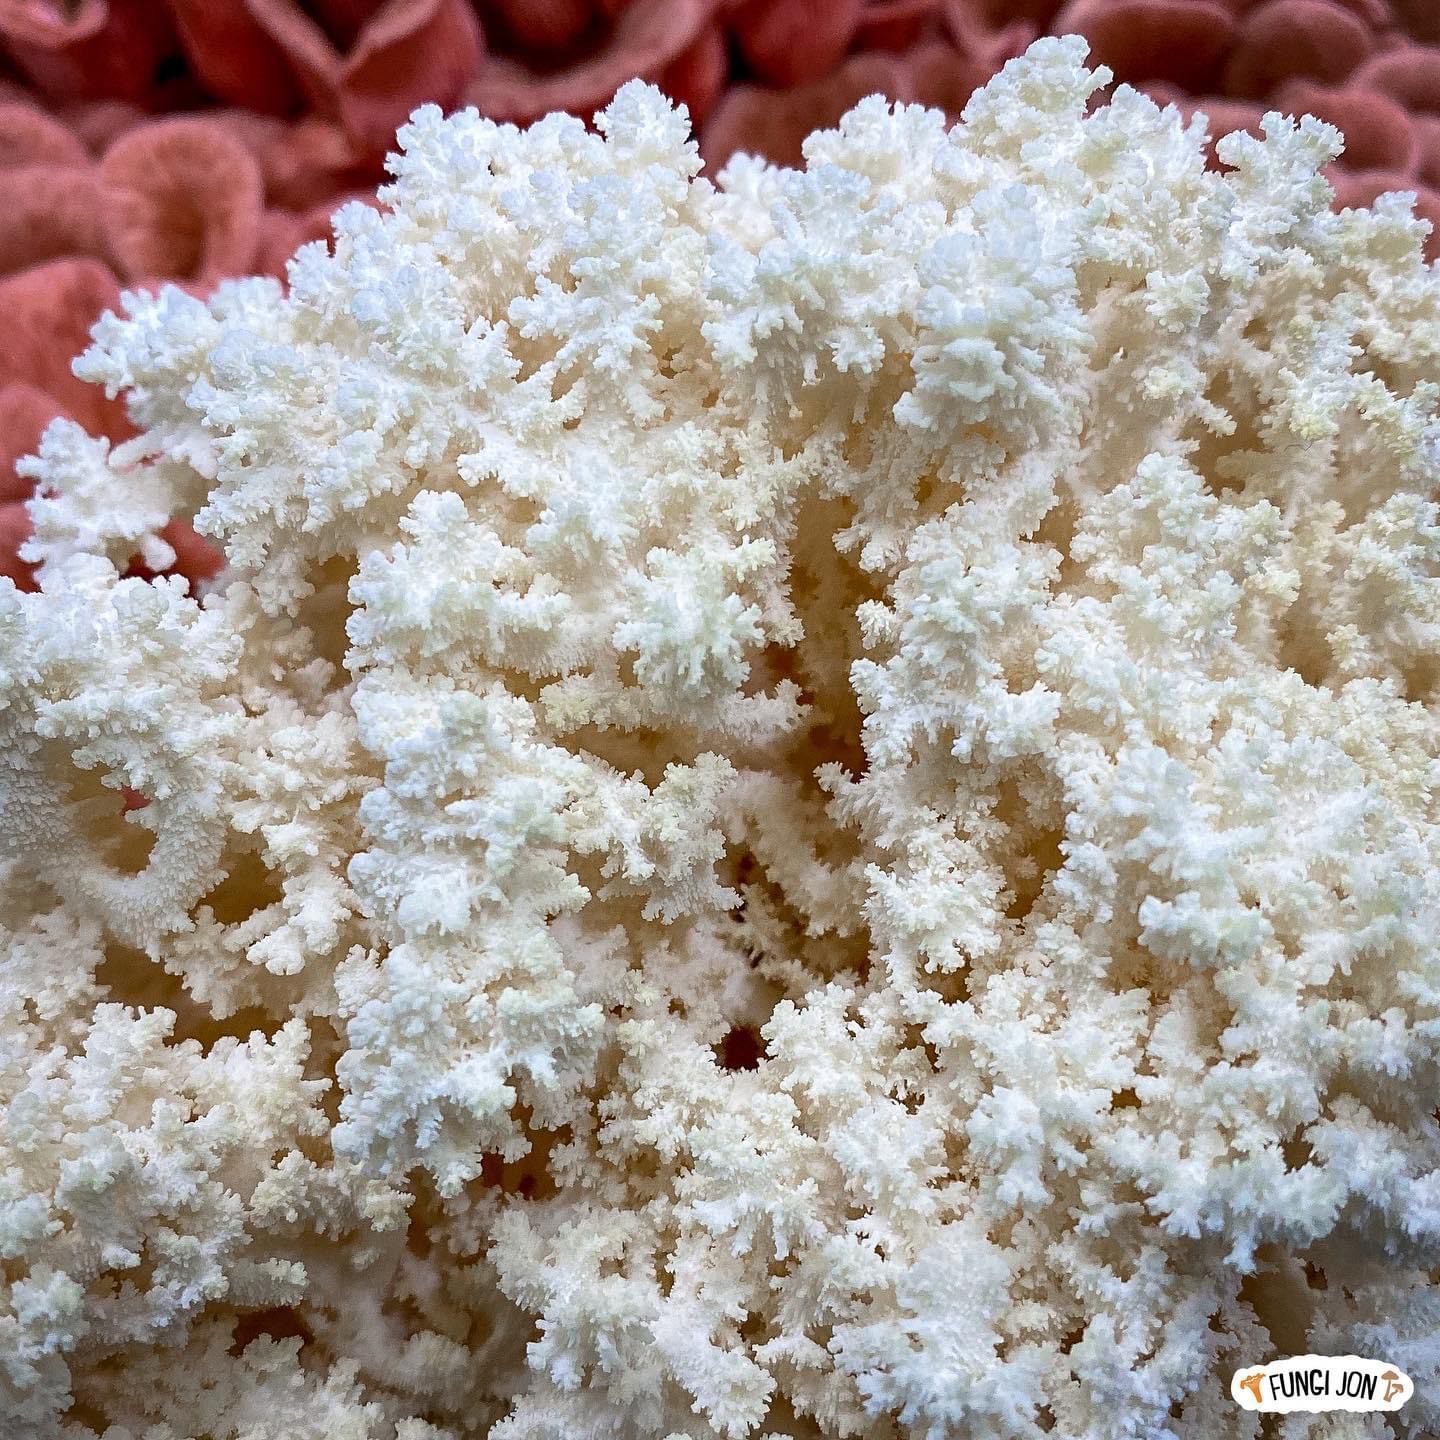 Coral Tooth Mushrooms & Nature's Fractal Wonders